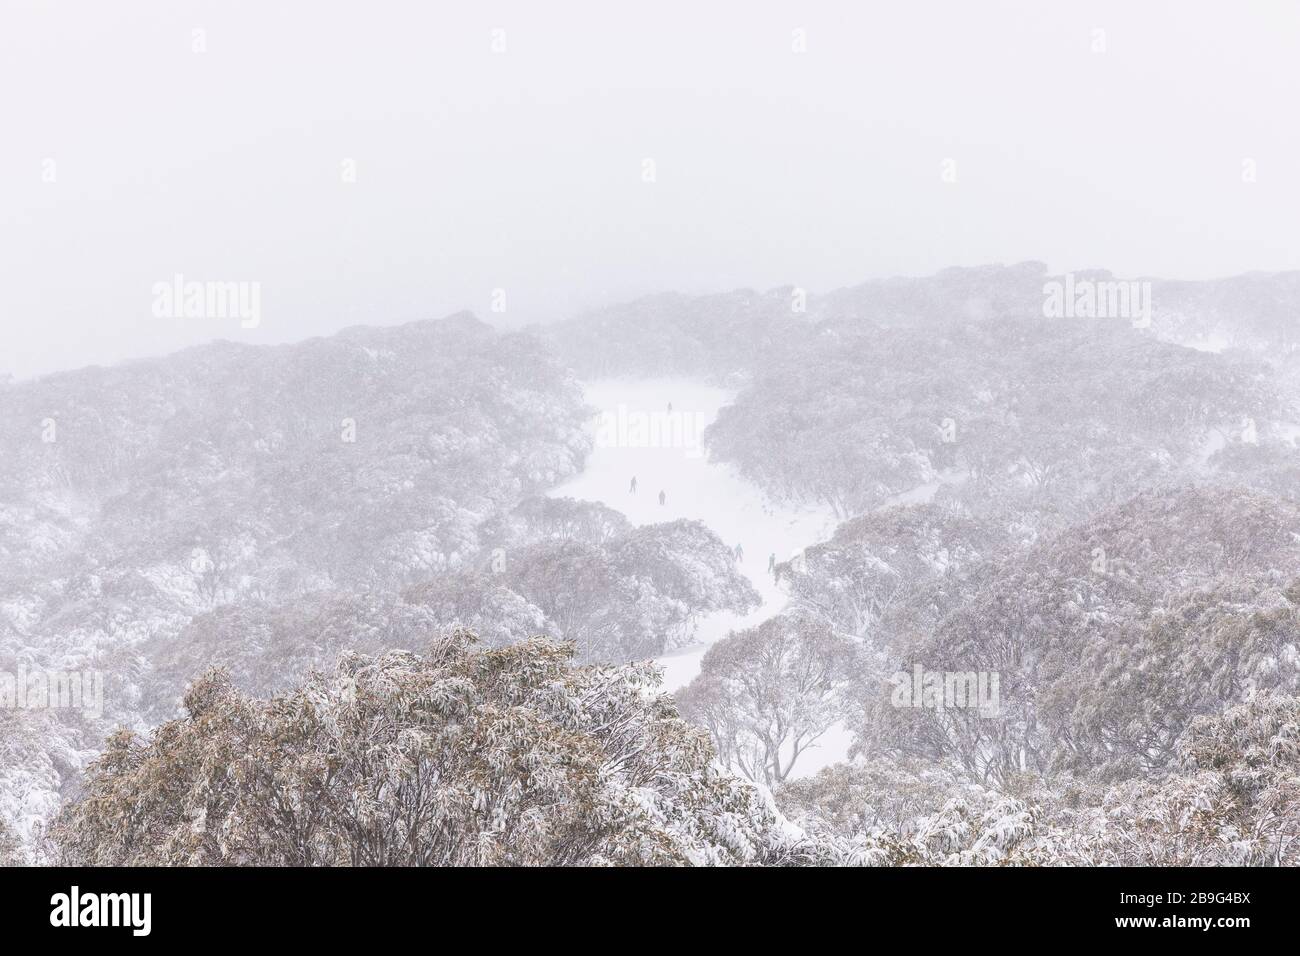 Scenic view skiers on snowy mountain slope, Falls Creek, Victoria, Australia Stock Photo